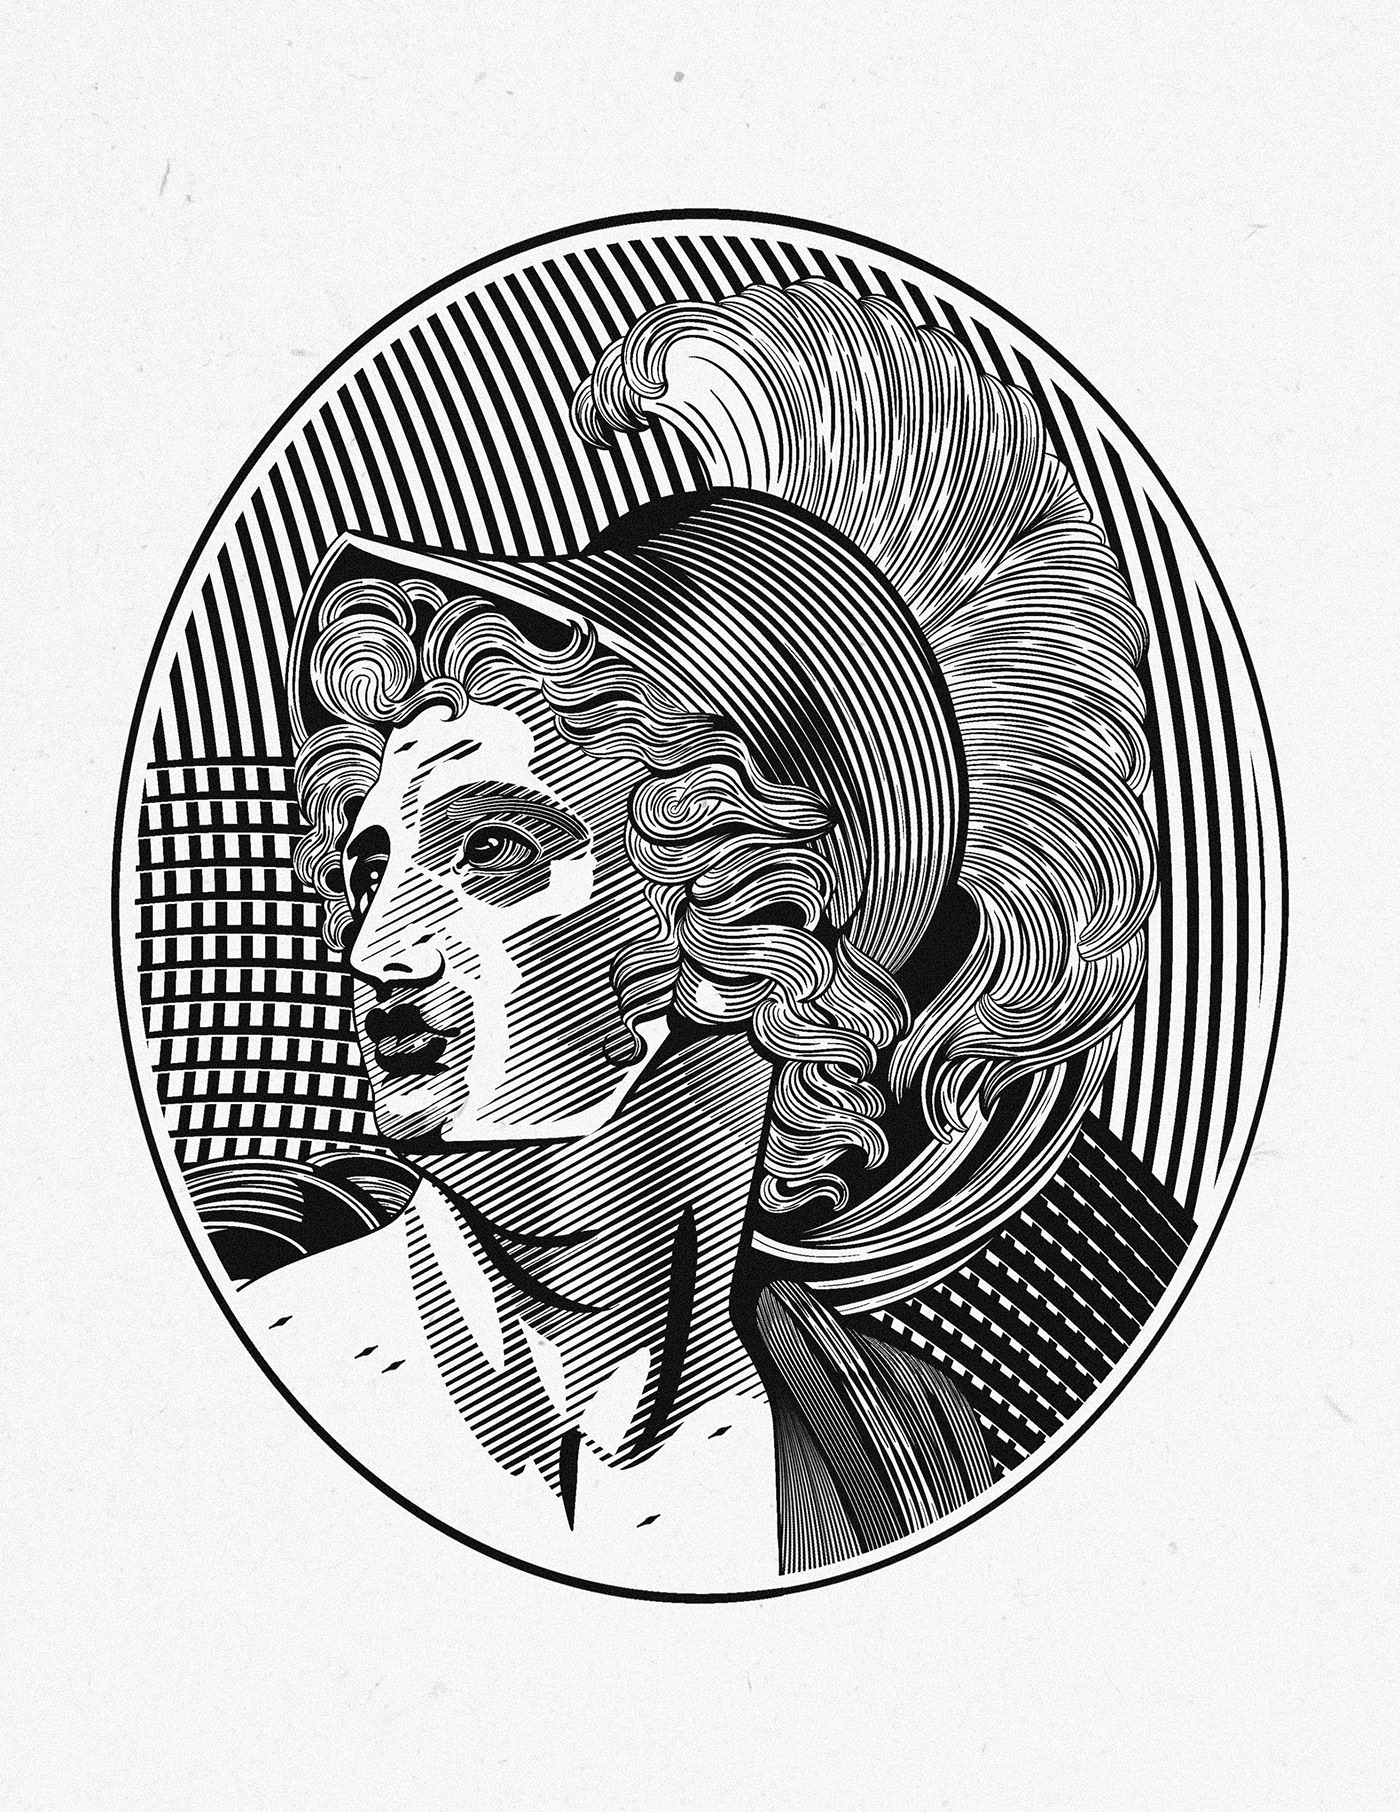 Aleister Crowley alexander black and white engraving gravure julius caesar line art napoleon Porfirio Diaz salvador dali